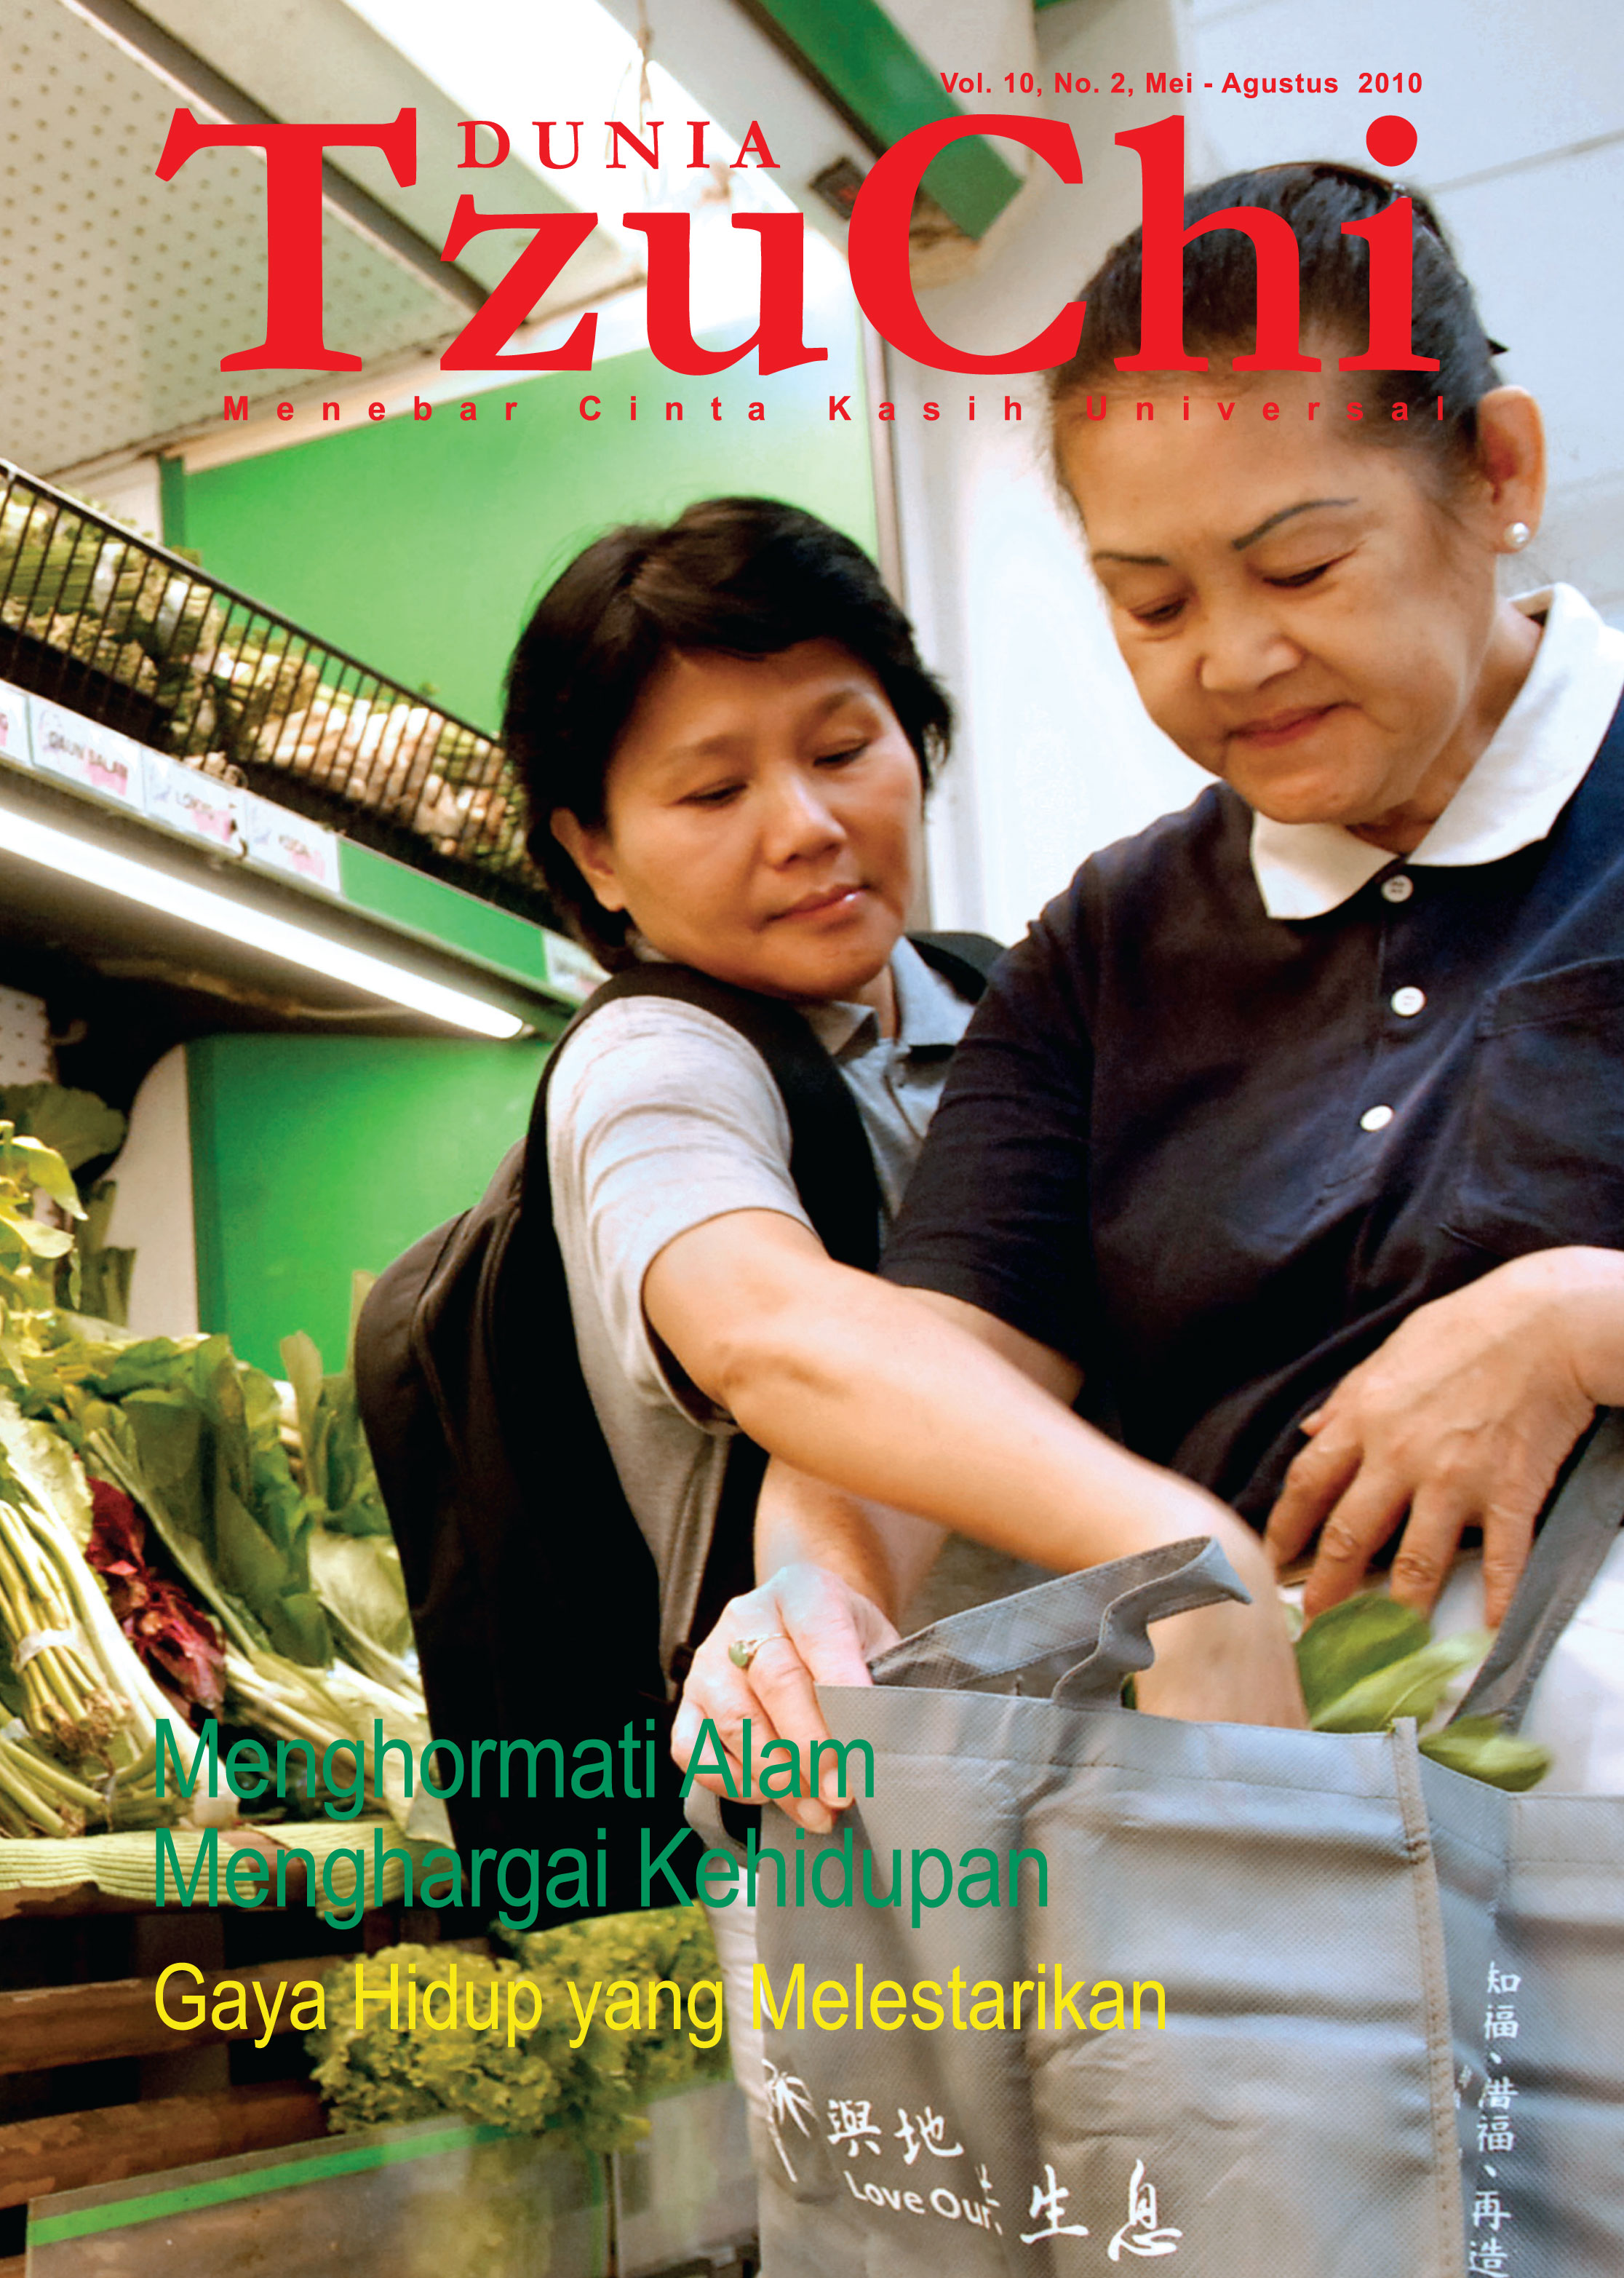 Majalah Dunia Tzu Chi Mei - Agustus 2010